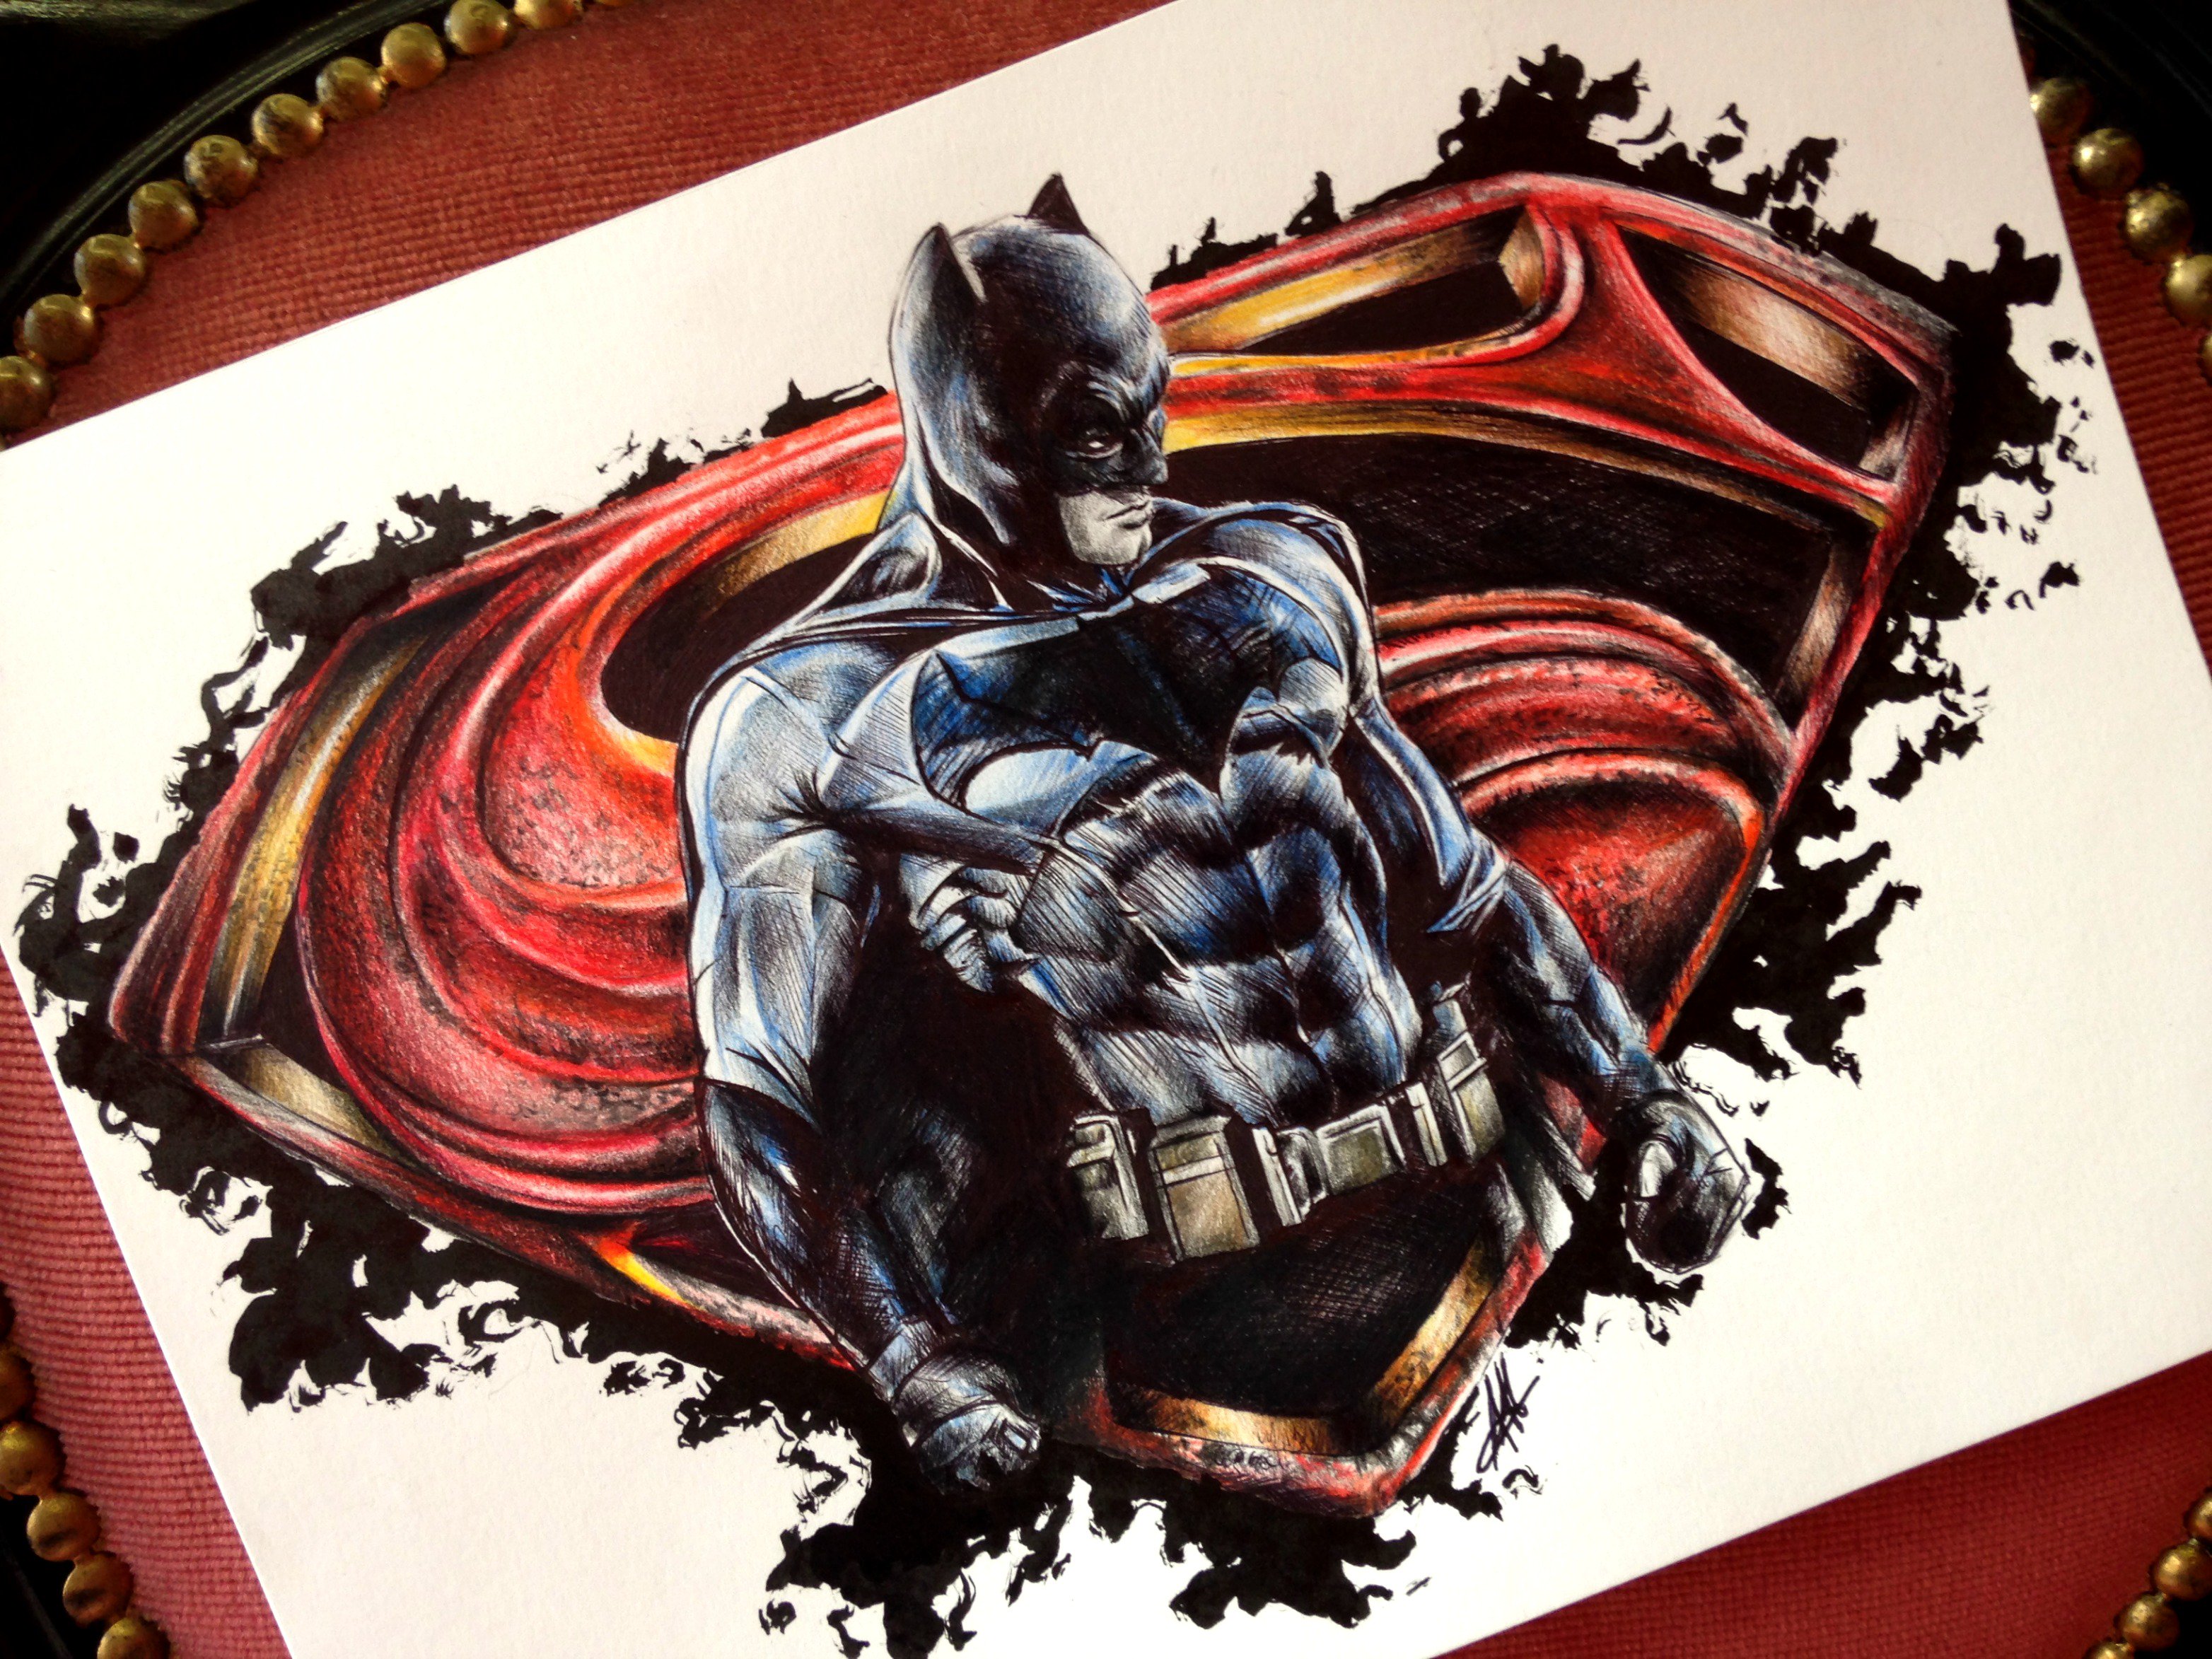 marrón Óxido Influyente AntoniettaArnoneArts on Twitter: "Waiting for #BatmanvsSuperman !! #batman # superman #movie #dccomics #sketch #tattoo #comics #drawing #cinema  https://t.co/bUpUcUC3E5" / Twitter